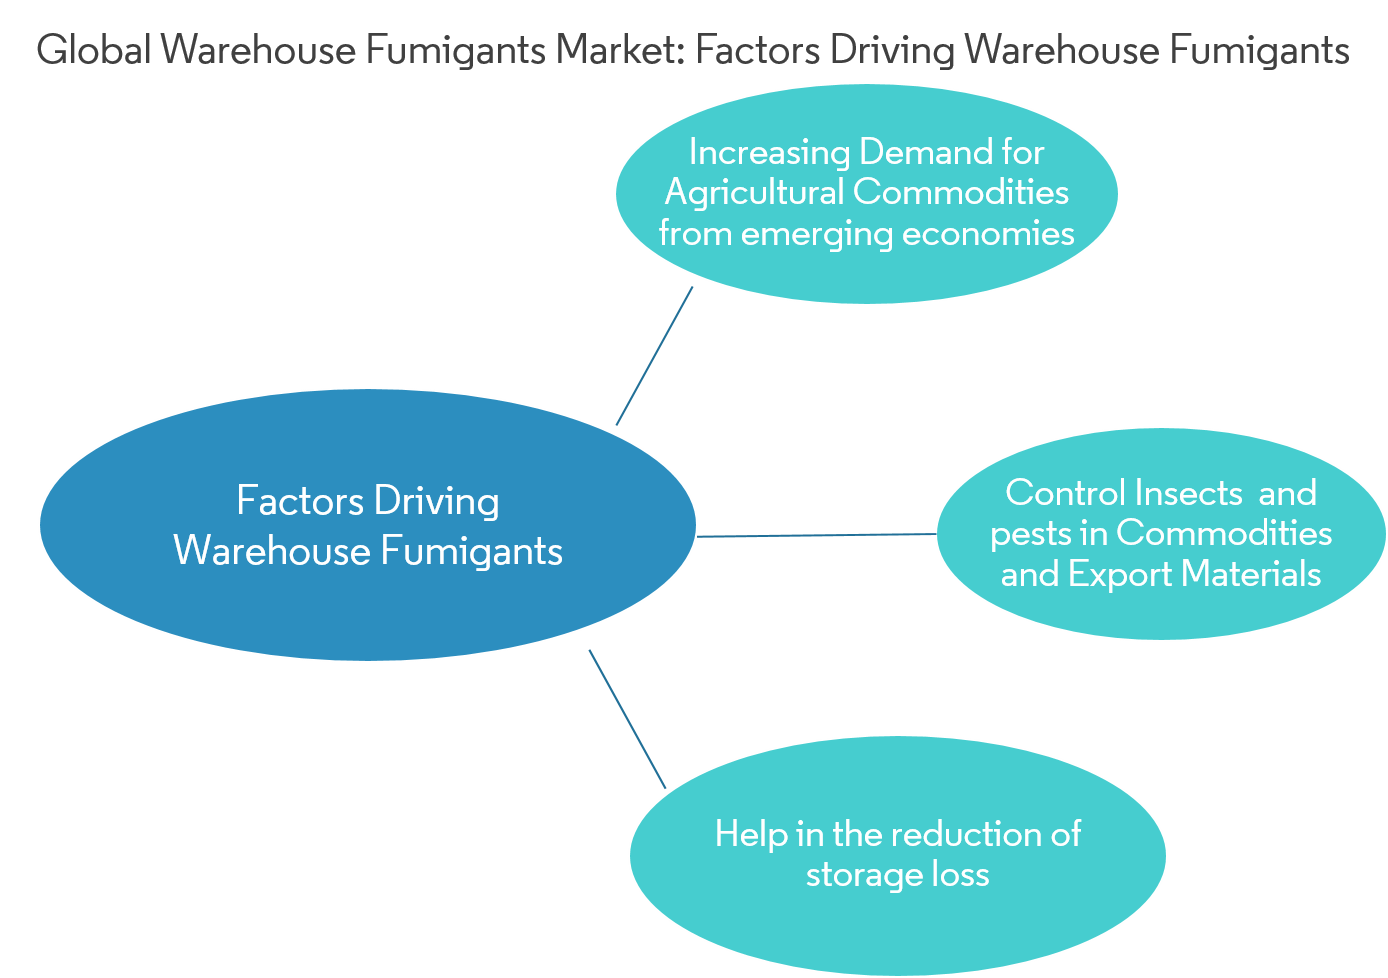  warehouse fumigants market share